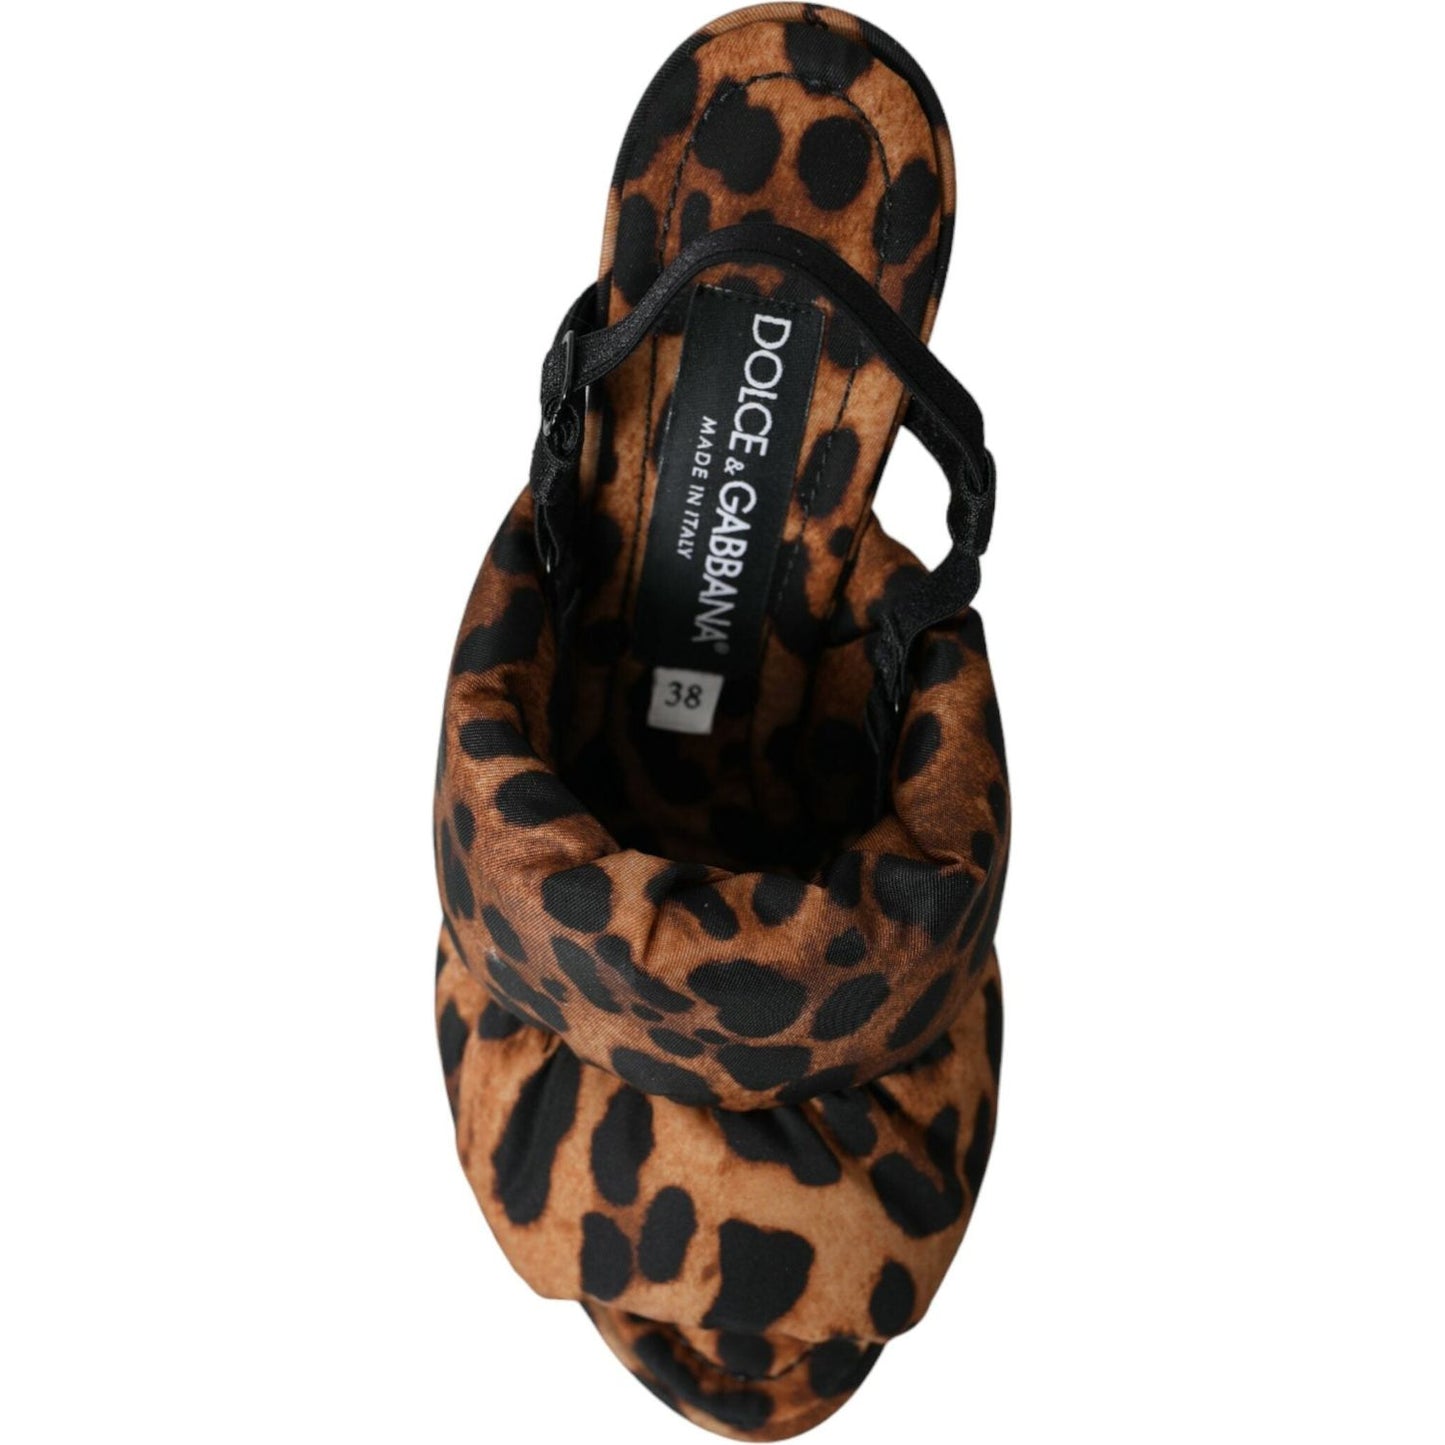 Dolce & Gabbana Brown Leopard Slingback Heels Sandals Shoes brown-leopard-slingback-heels-sandals-shoes